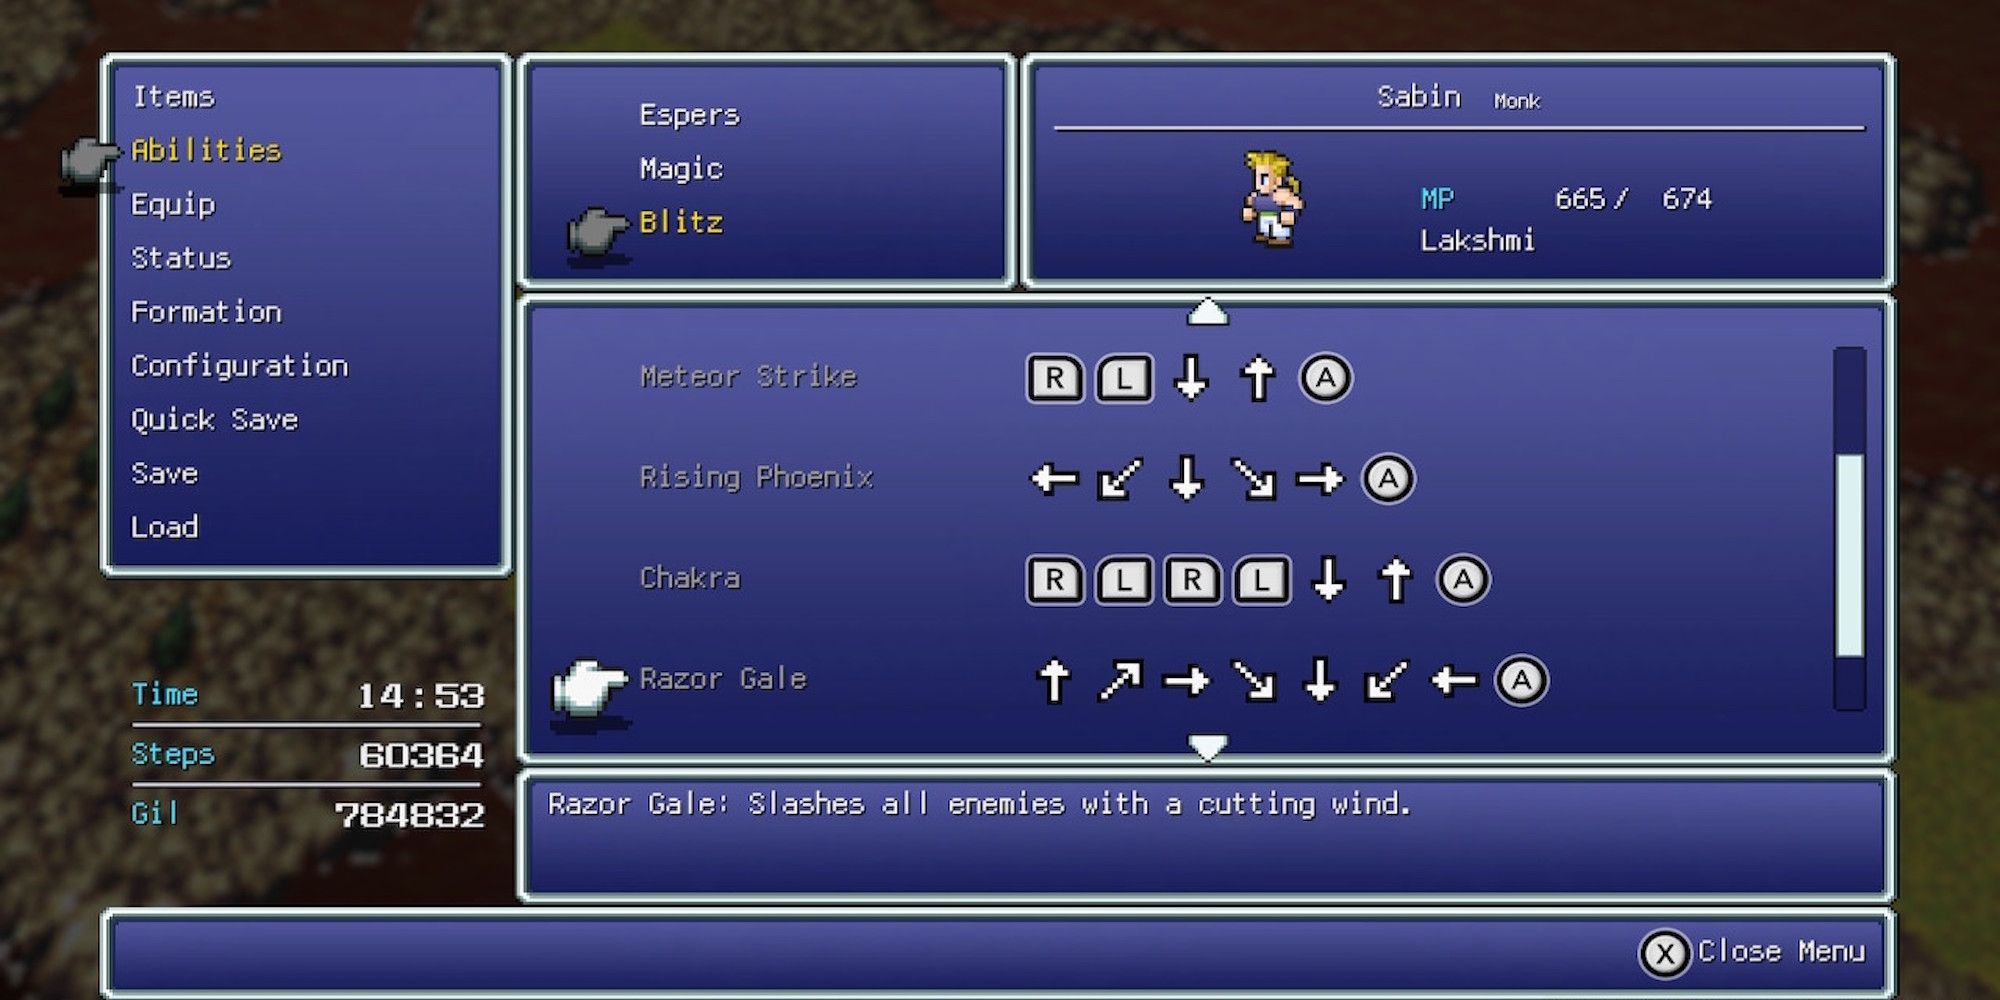 Razor Gale, Sabin’s ability in Final Fantasy 6